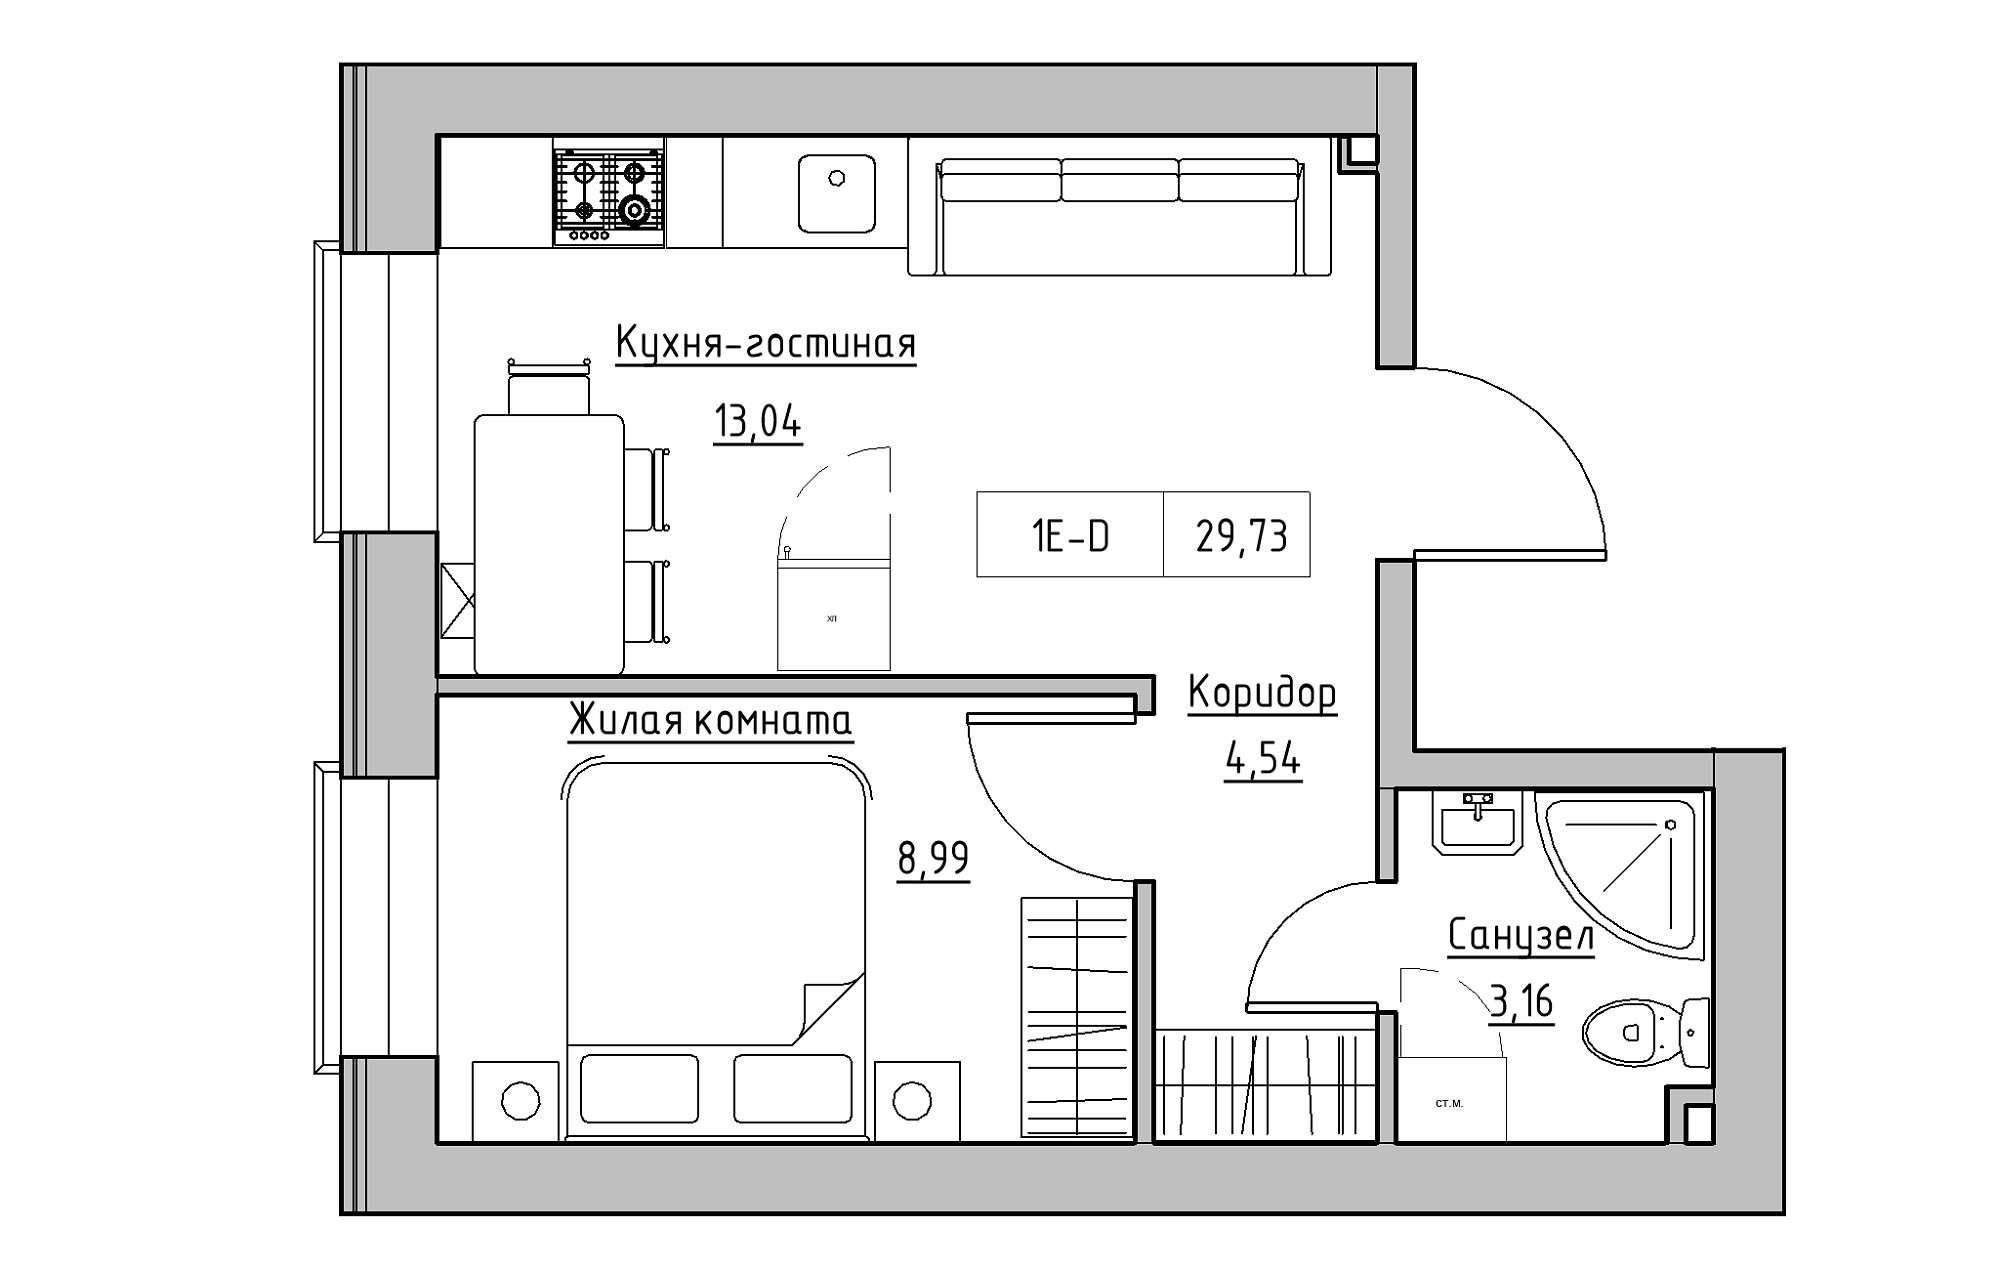 Planning 1-rm flats area 29.73m2, KS-018-01/0012.